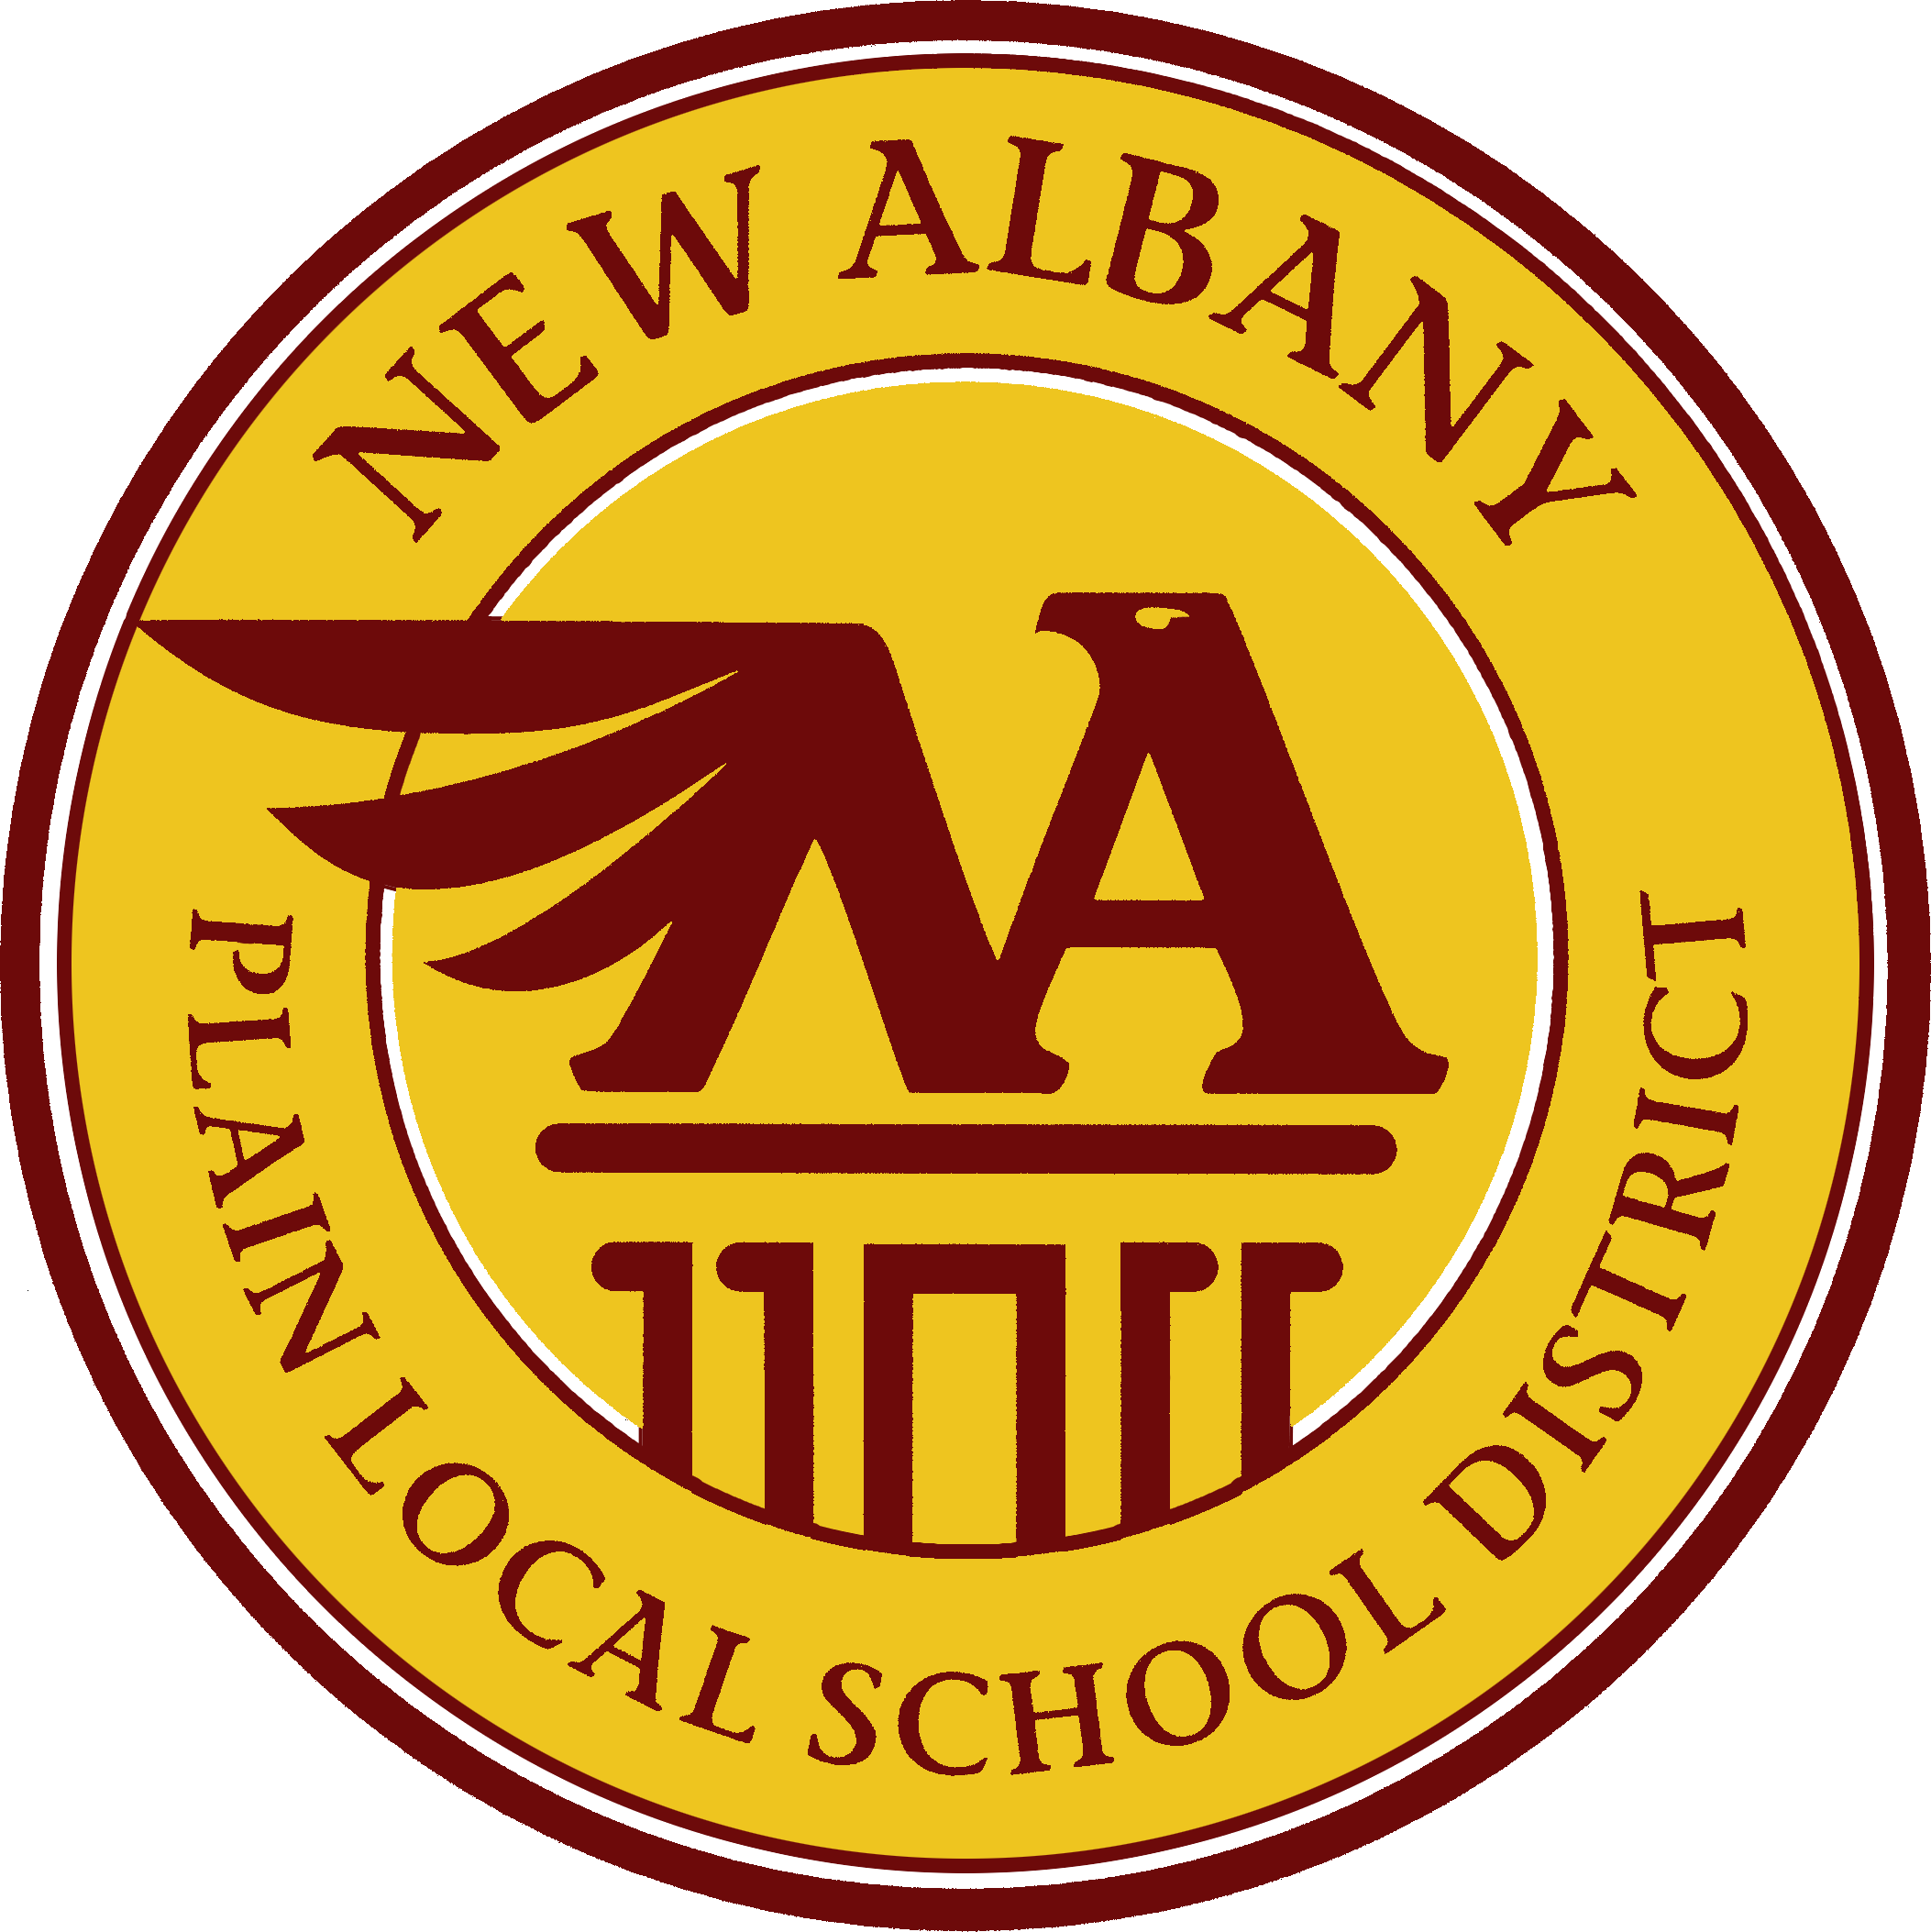 New Albany Schools